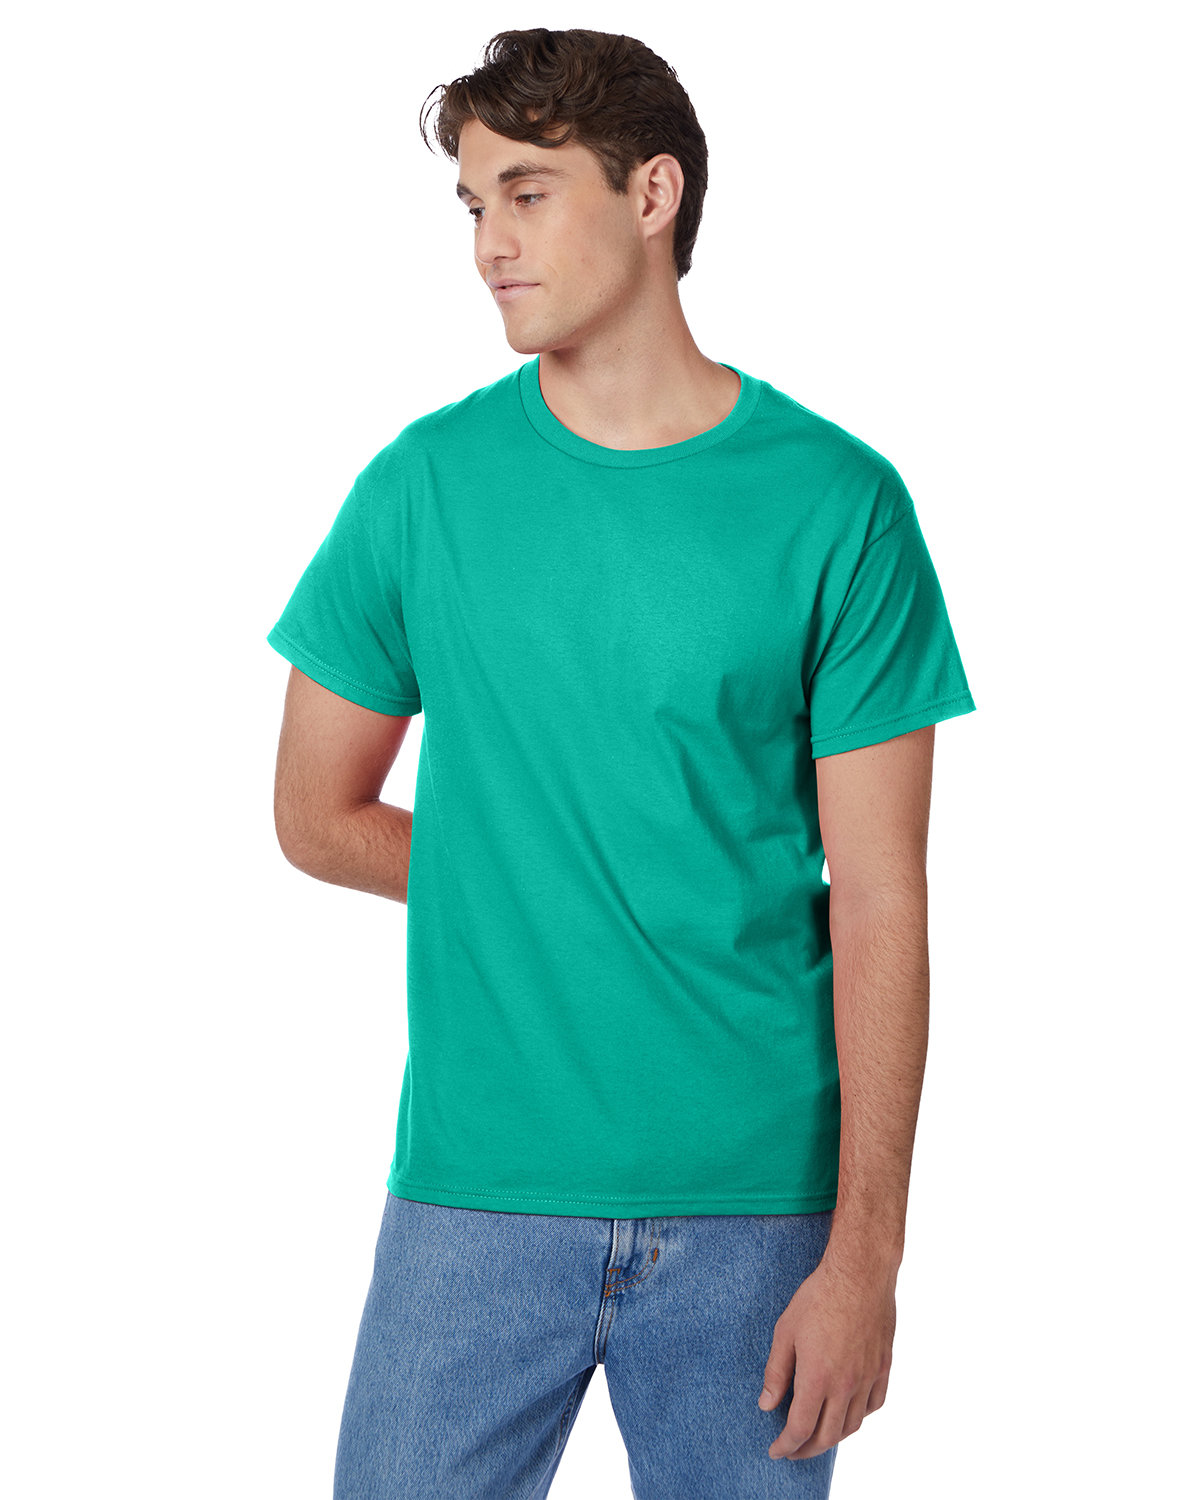 Hanes Men's Authentic-T T-Shirt KELLY GREEN 